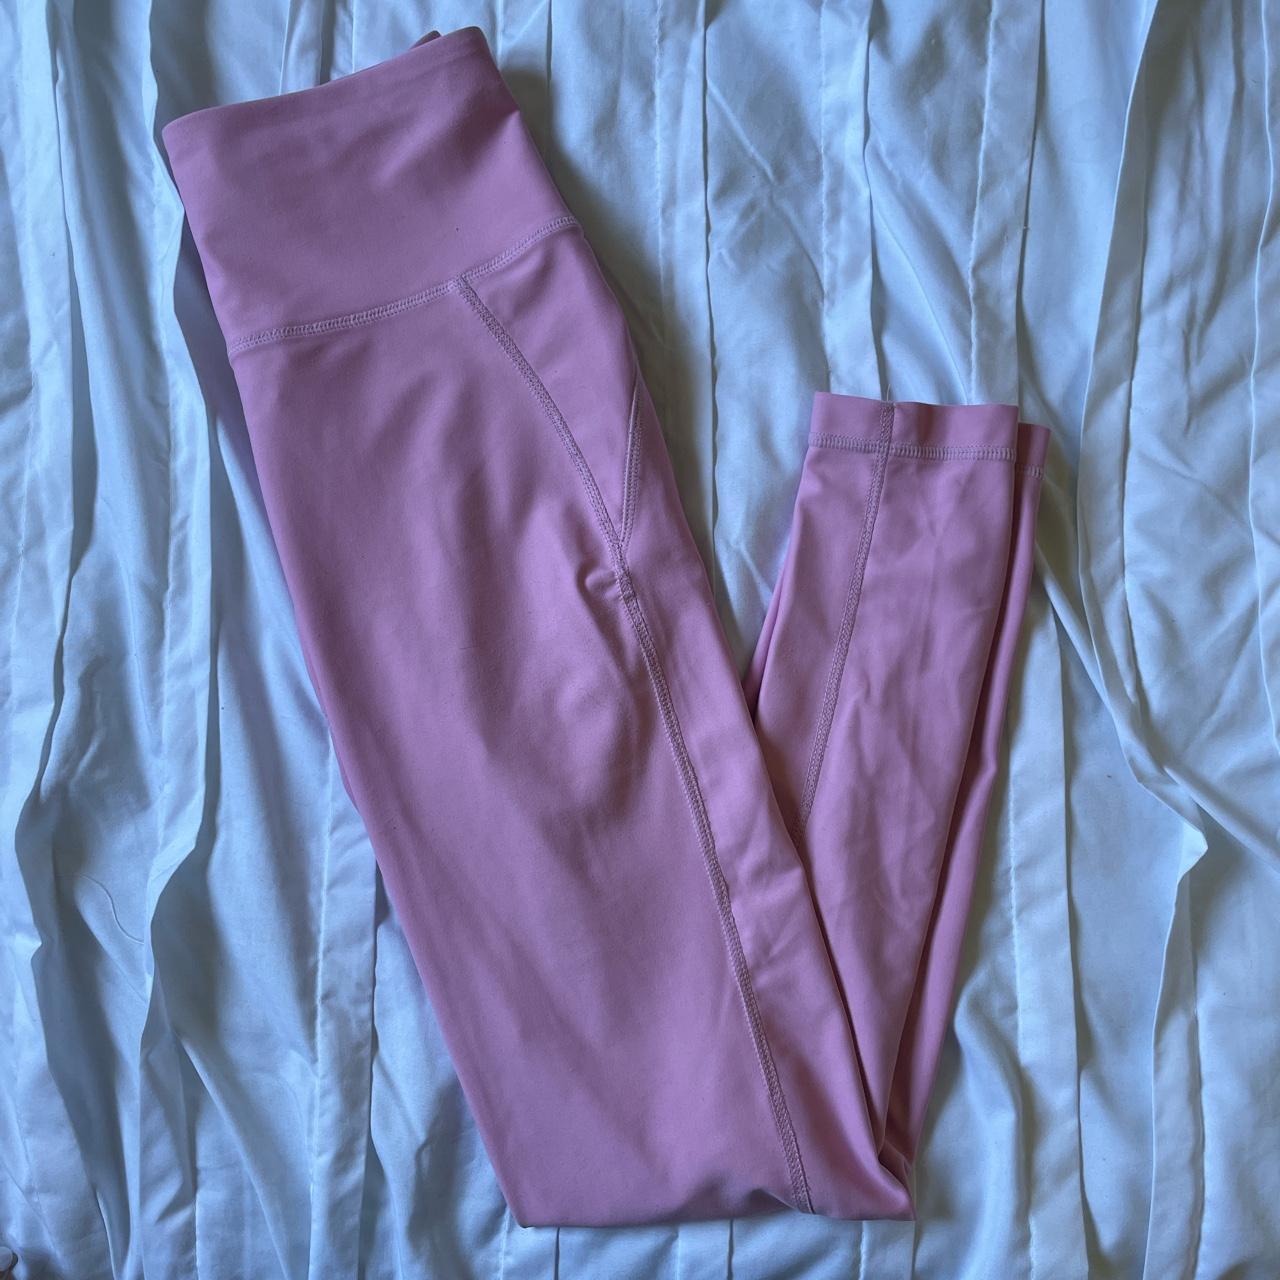 Rare print. Lularoe pink leggings with a blue - Depop